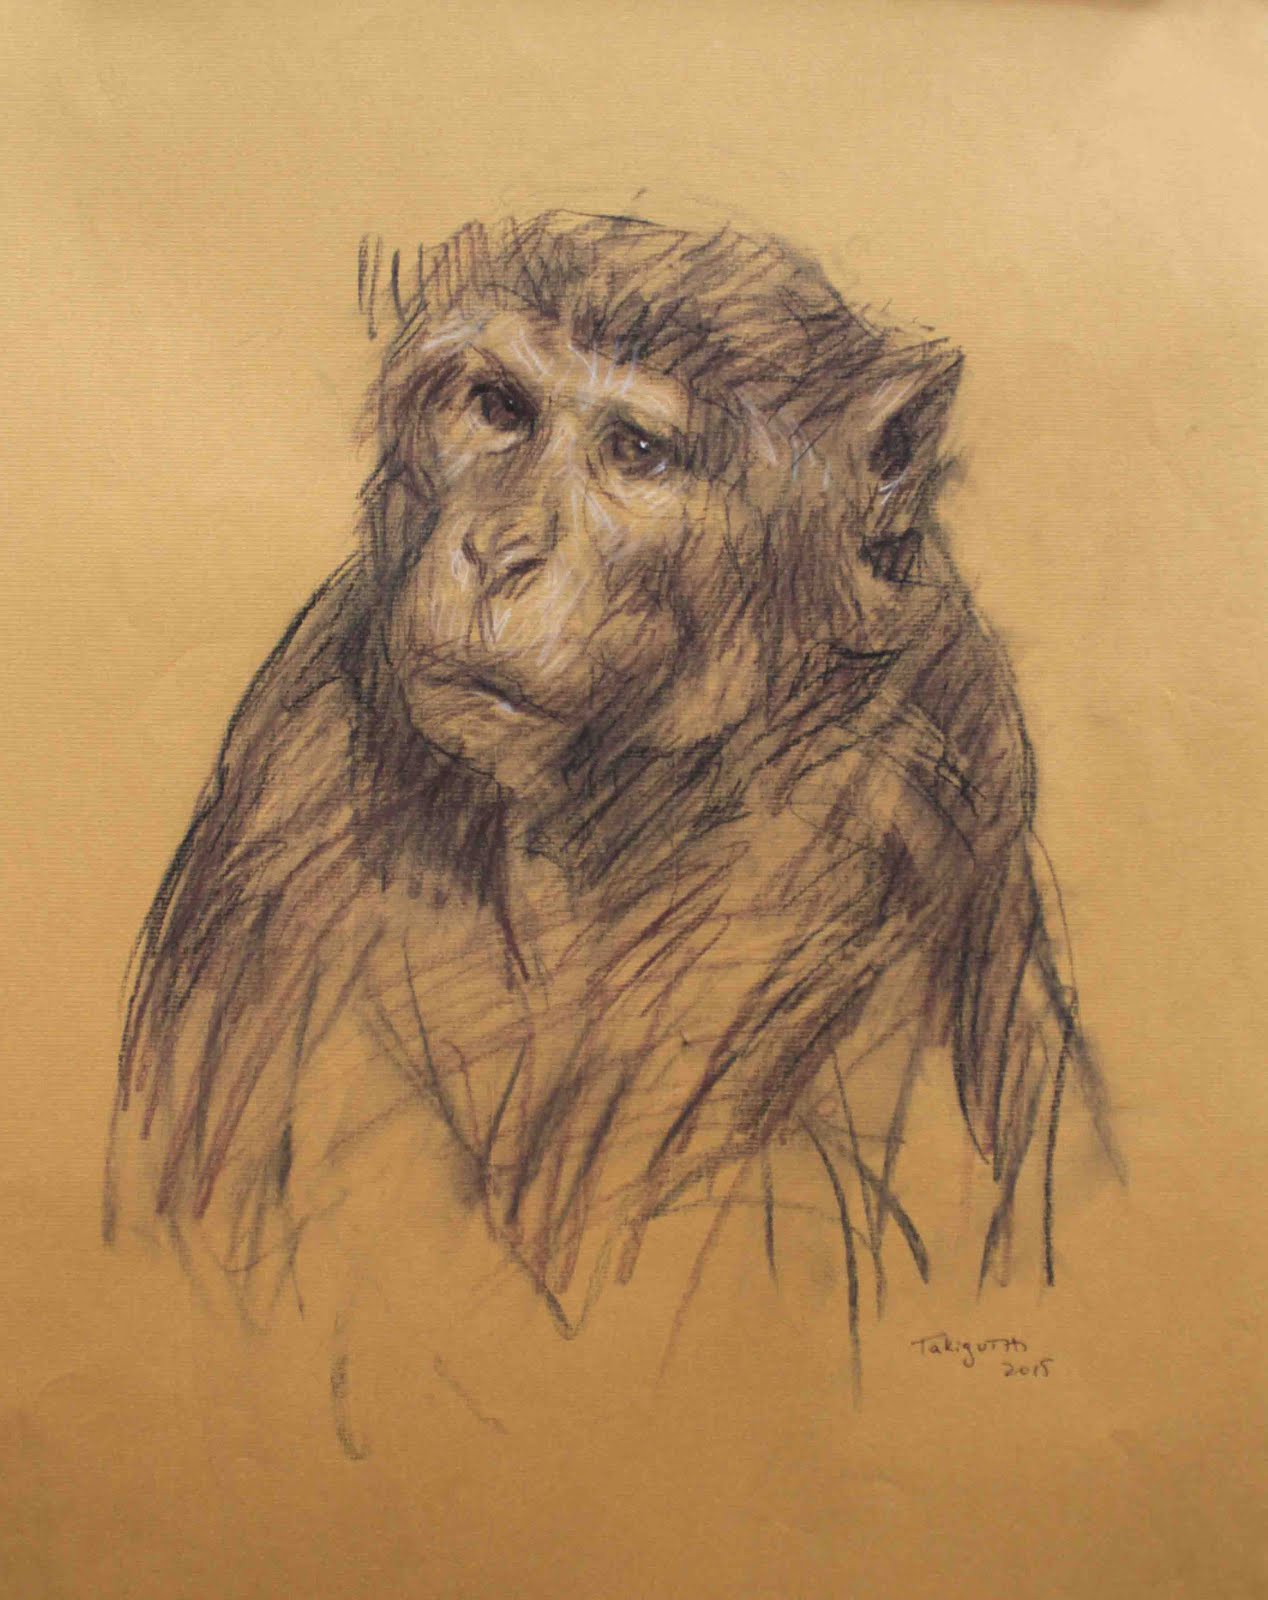 Arte Realista de Takiguthi: Gestual de macaco